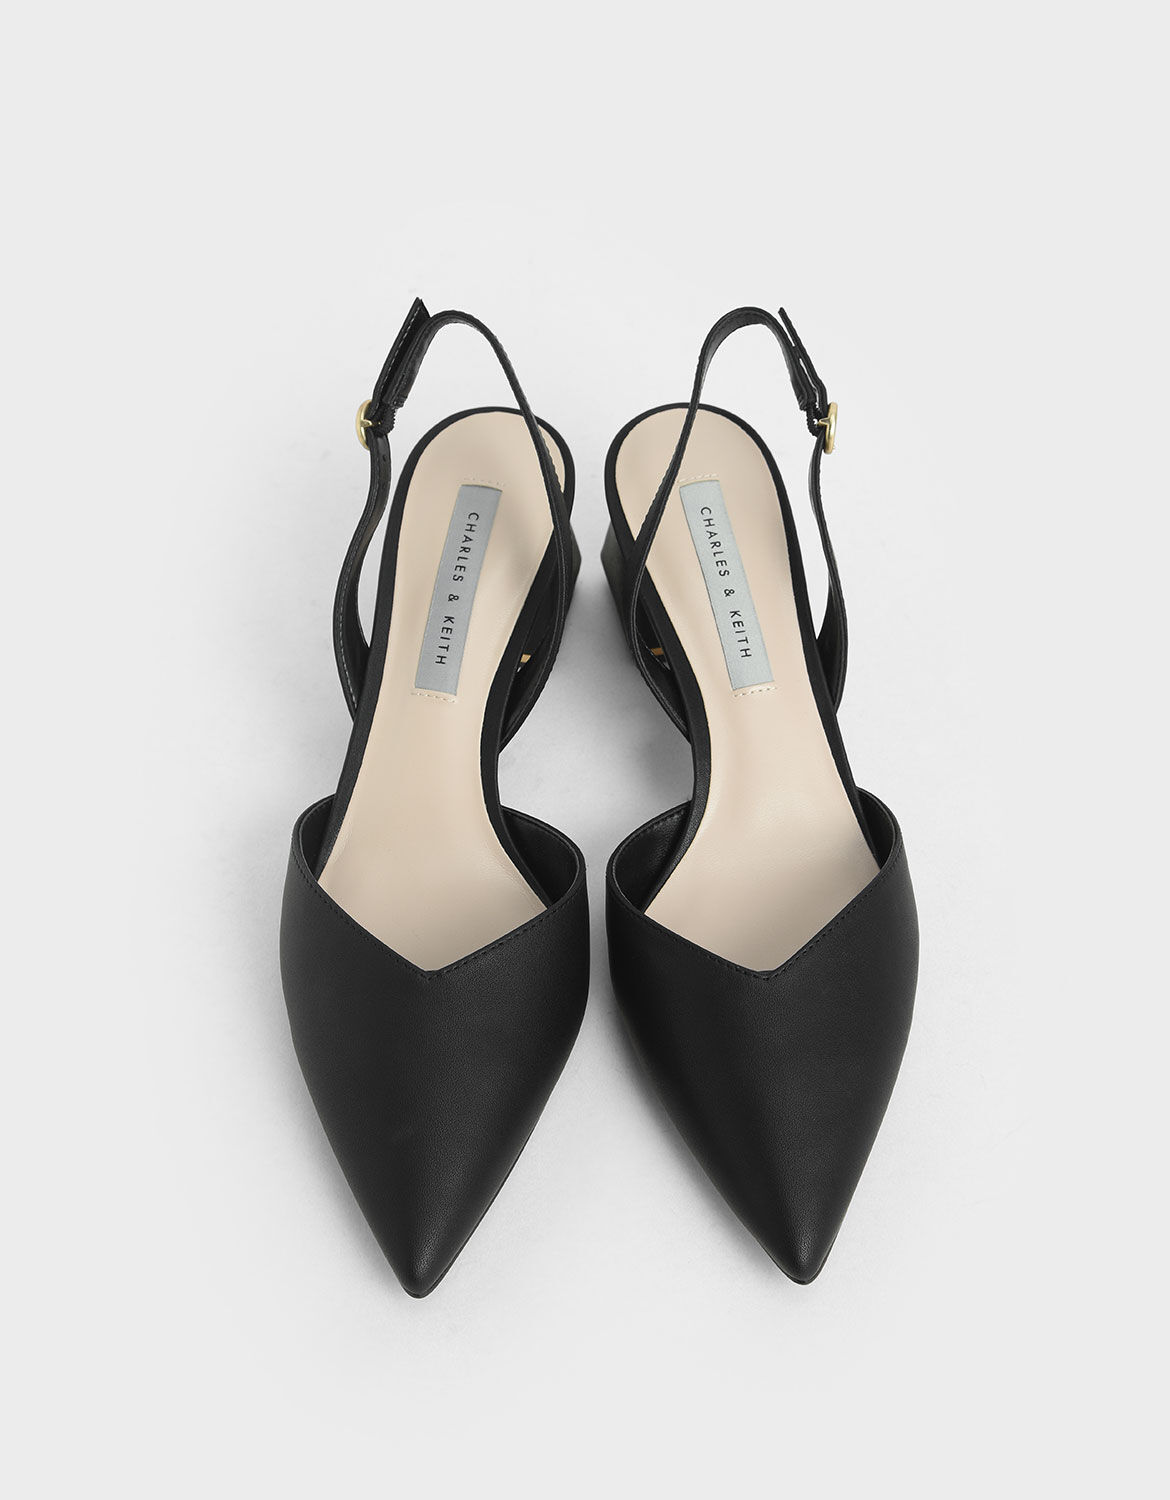 comfortable heels - Corporette.com